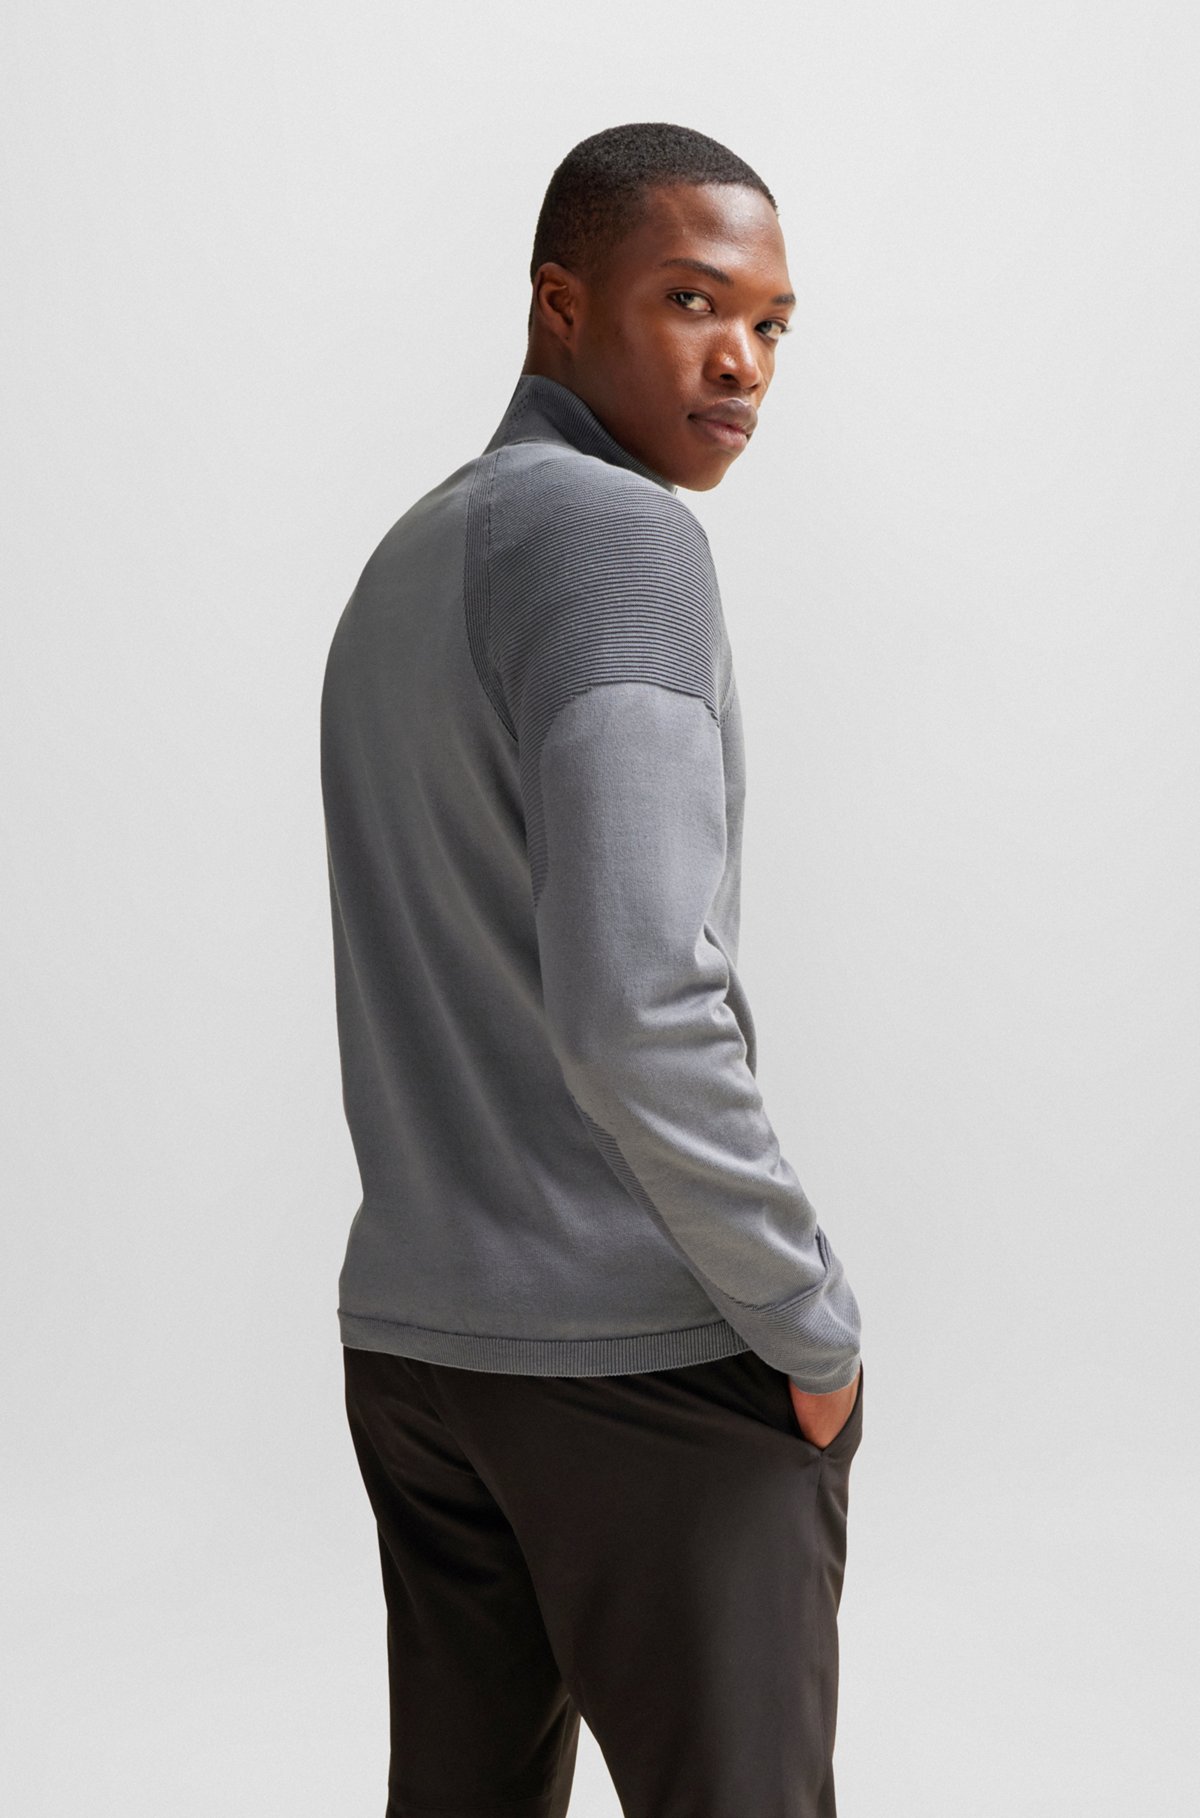 Cotton-blend zip-neck sweater with logo detail, Grey